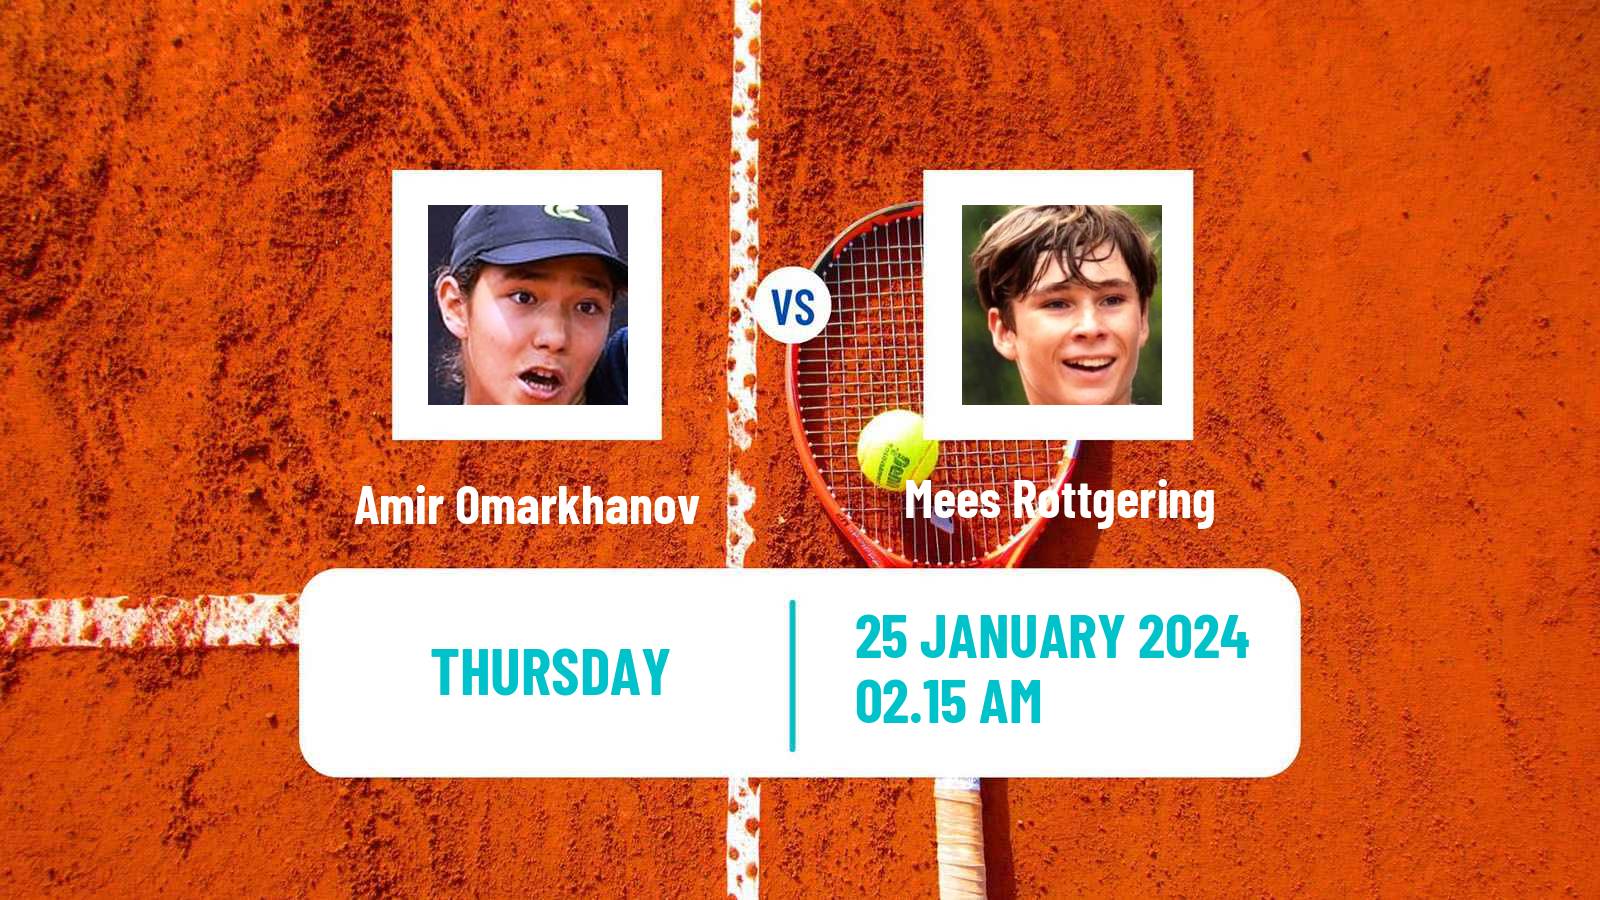 Tennis Boys Singles Australian Open Amir Omarkhanov - Mees Rottgering